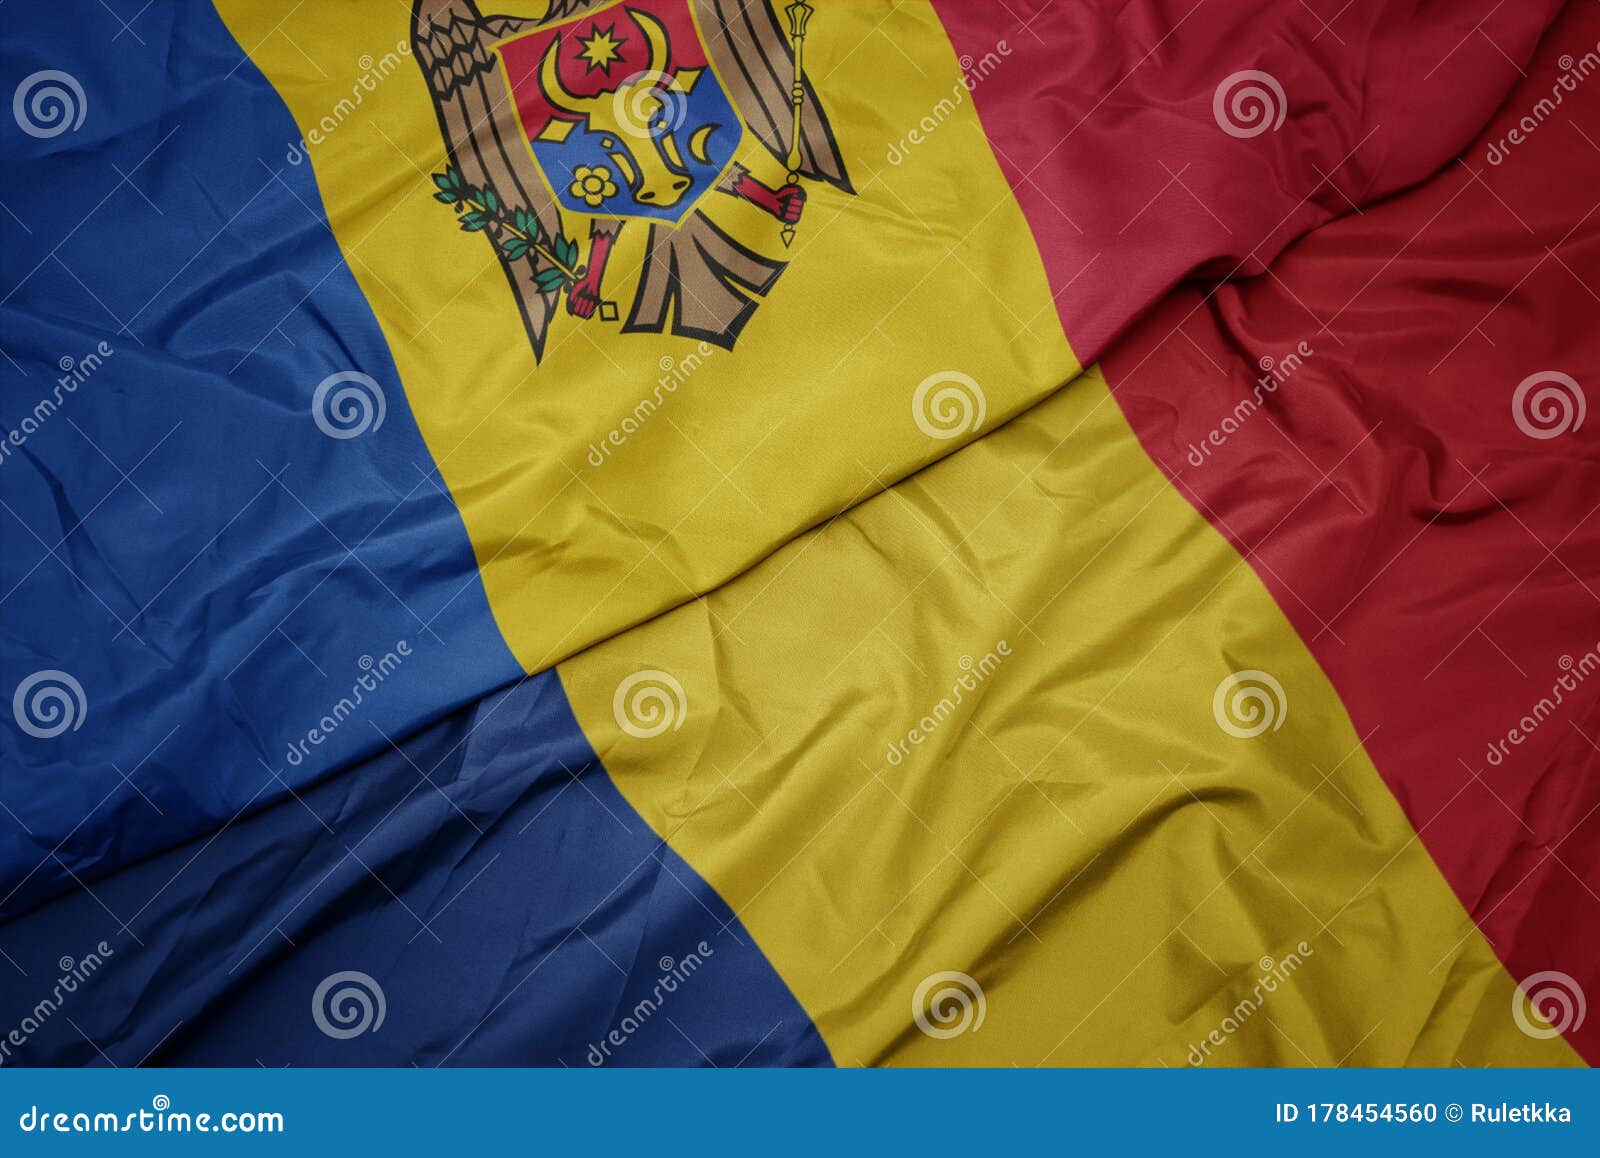 waving colorful flag of romania and national flag of moldova